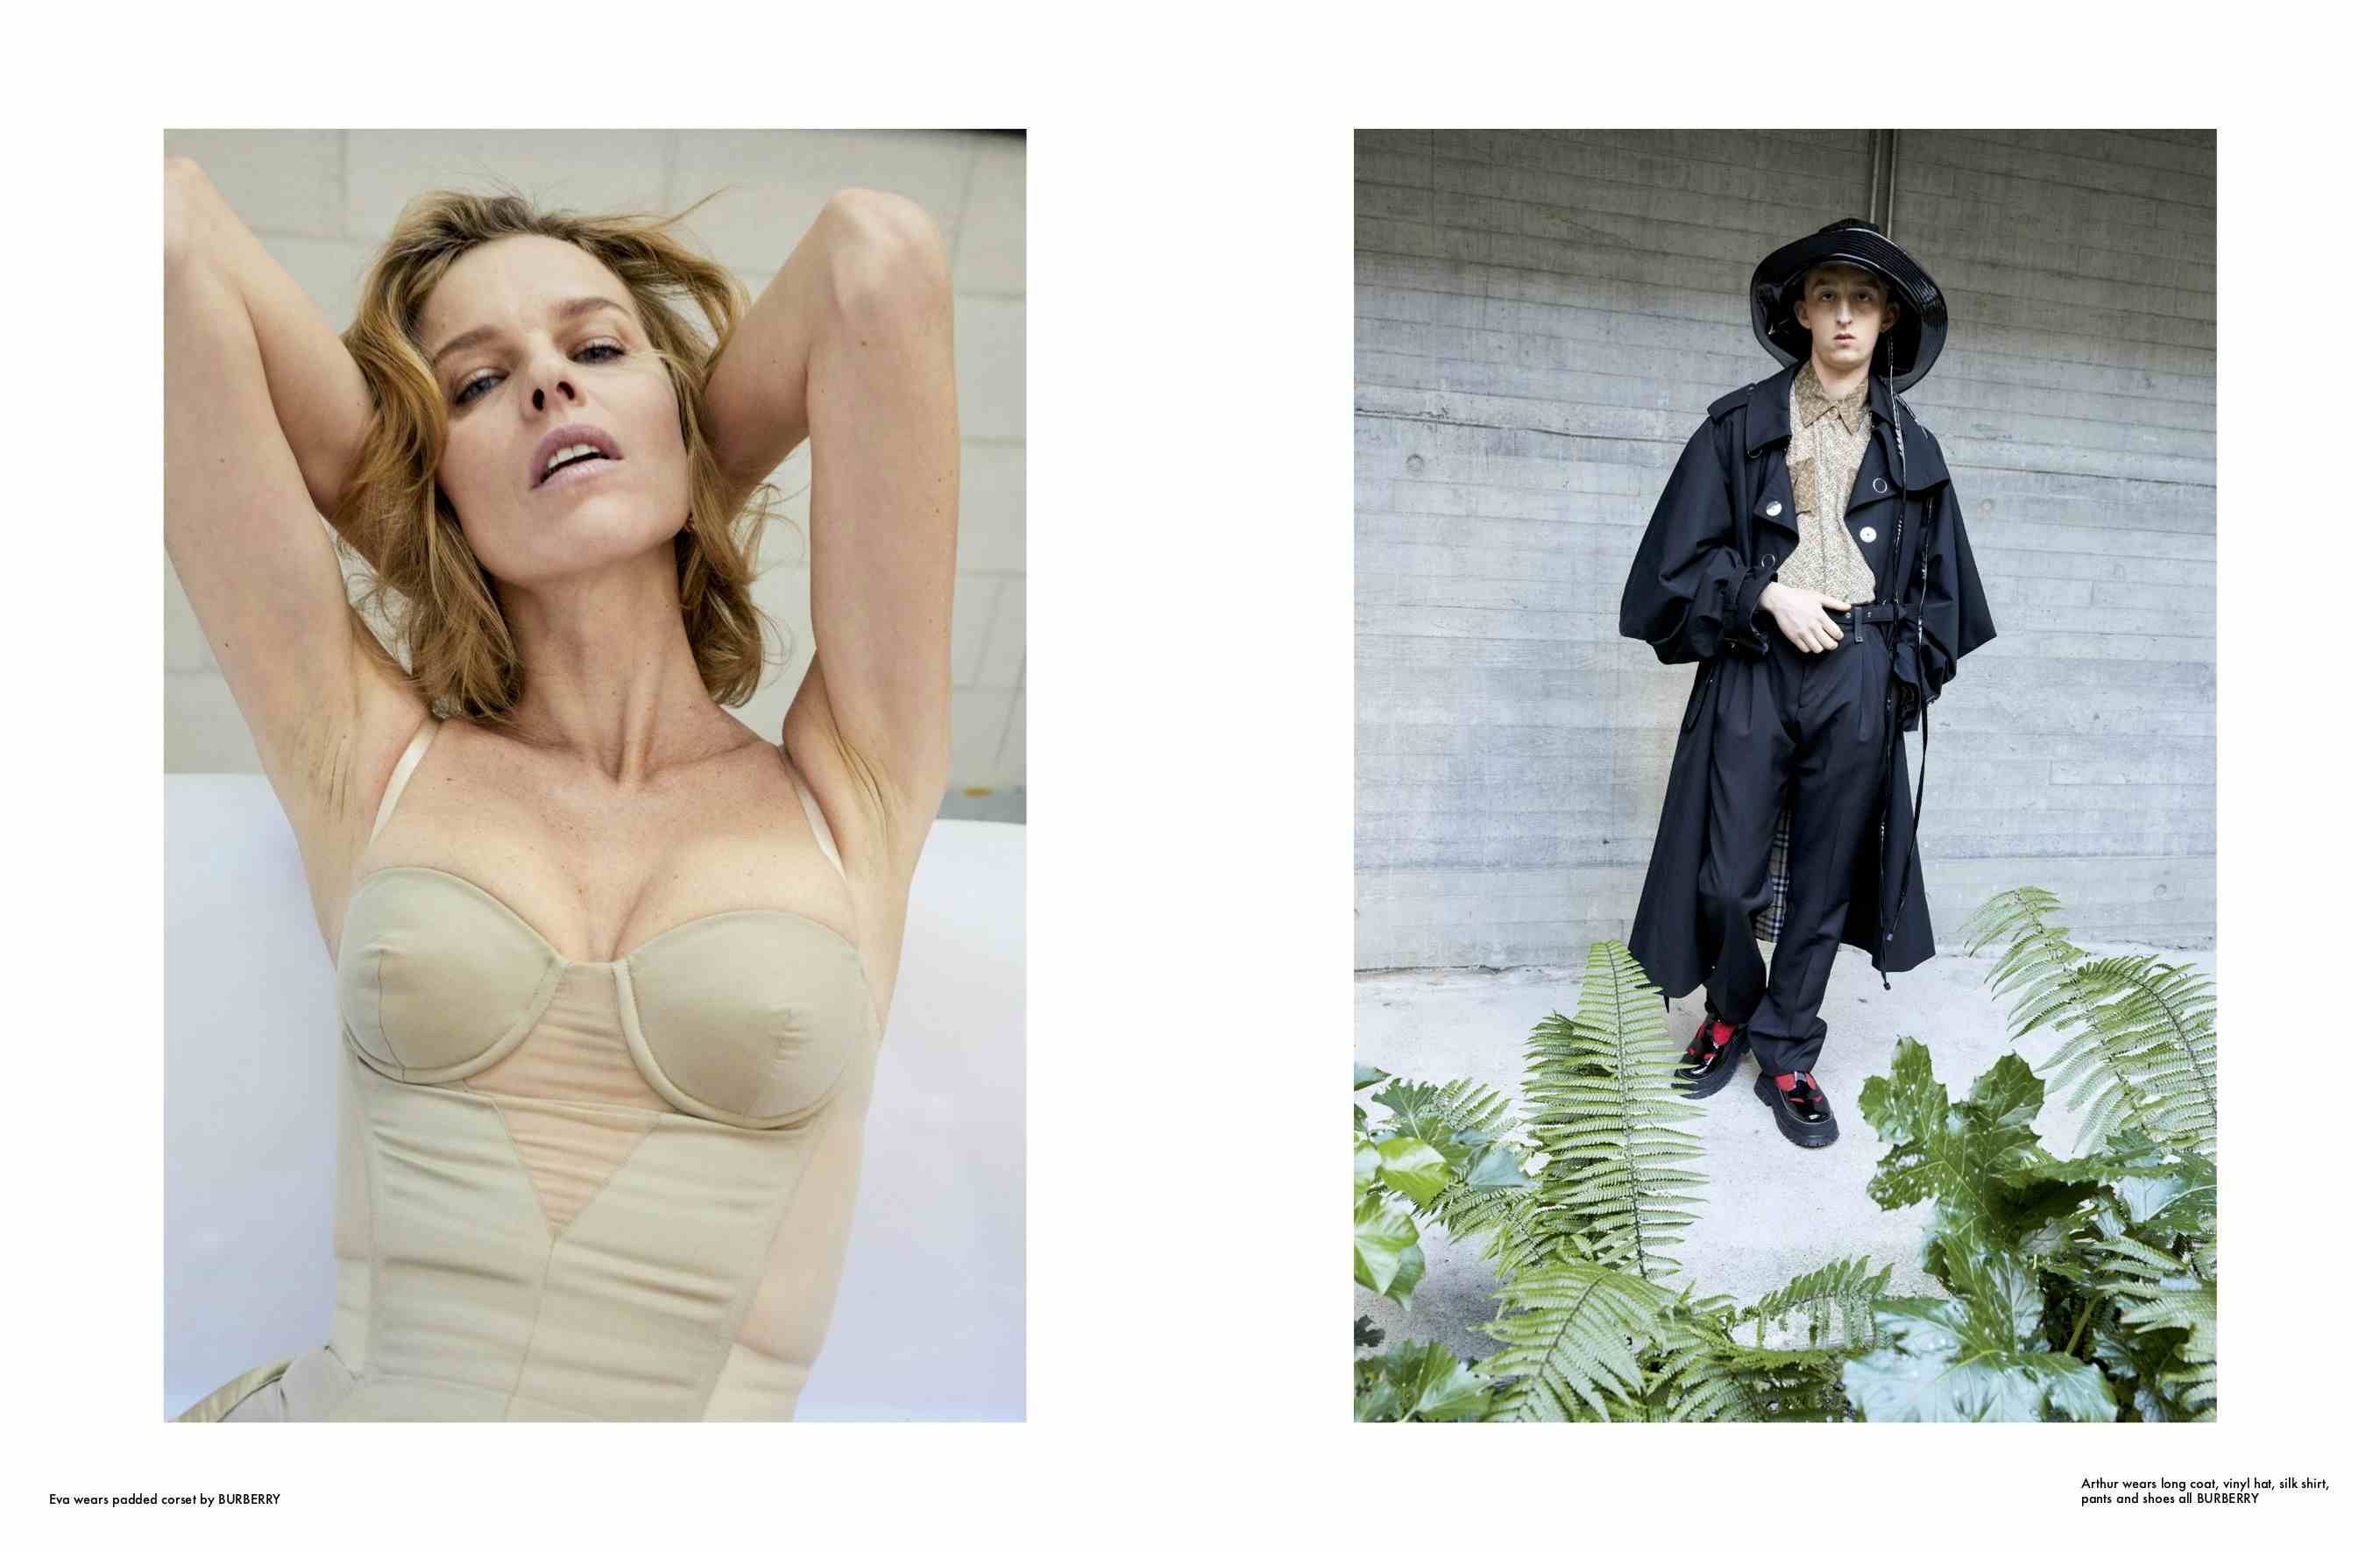 RE-EDITION - Burberry Special SS 2019
Photographer: Juergen Teller
Model: Eva Herzigová, Lily McMenamy, Riccardo Tisci, 
Location: London